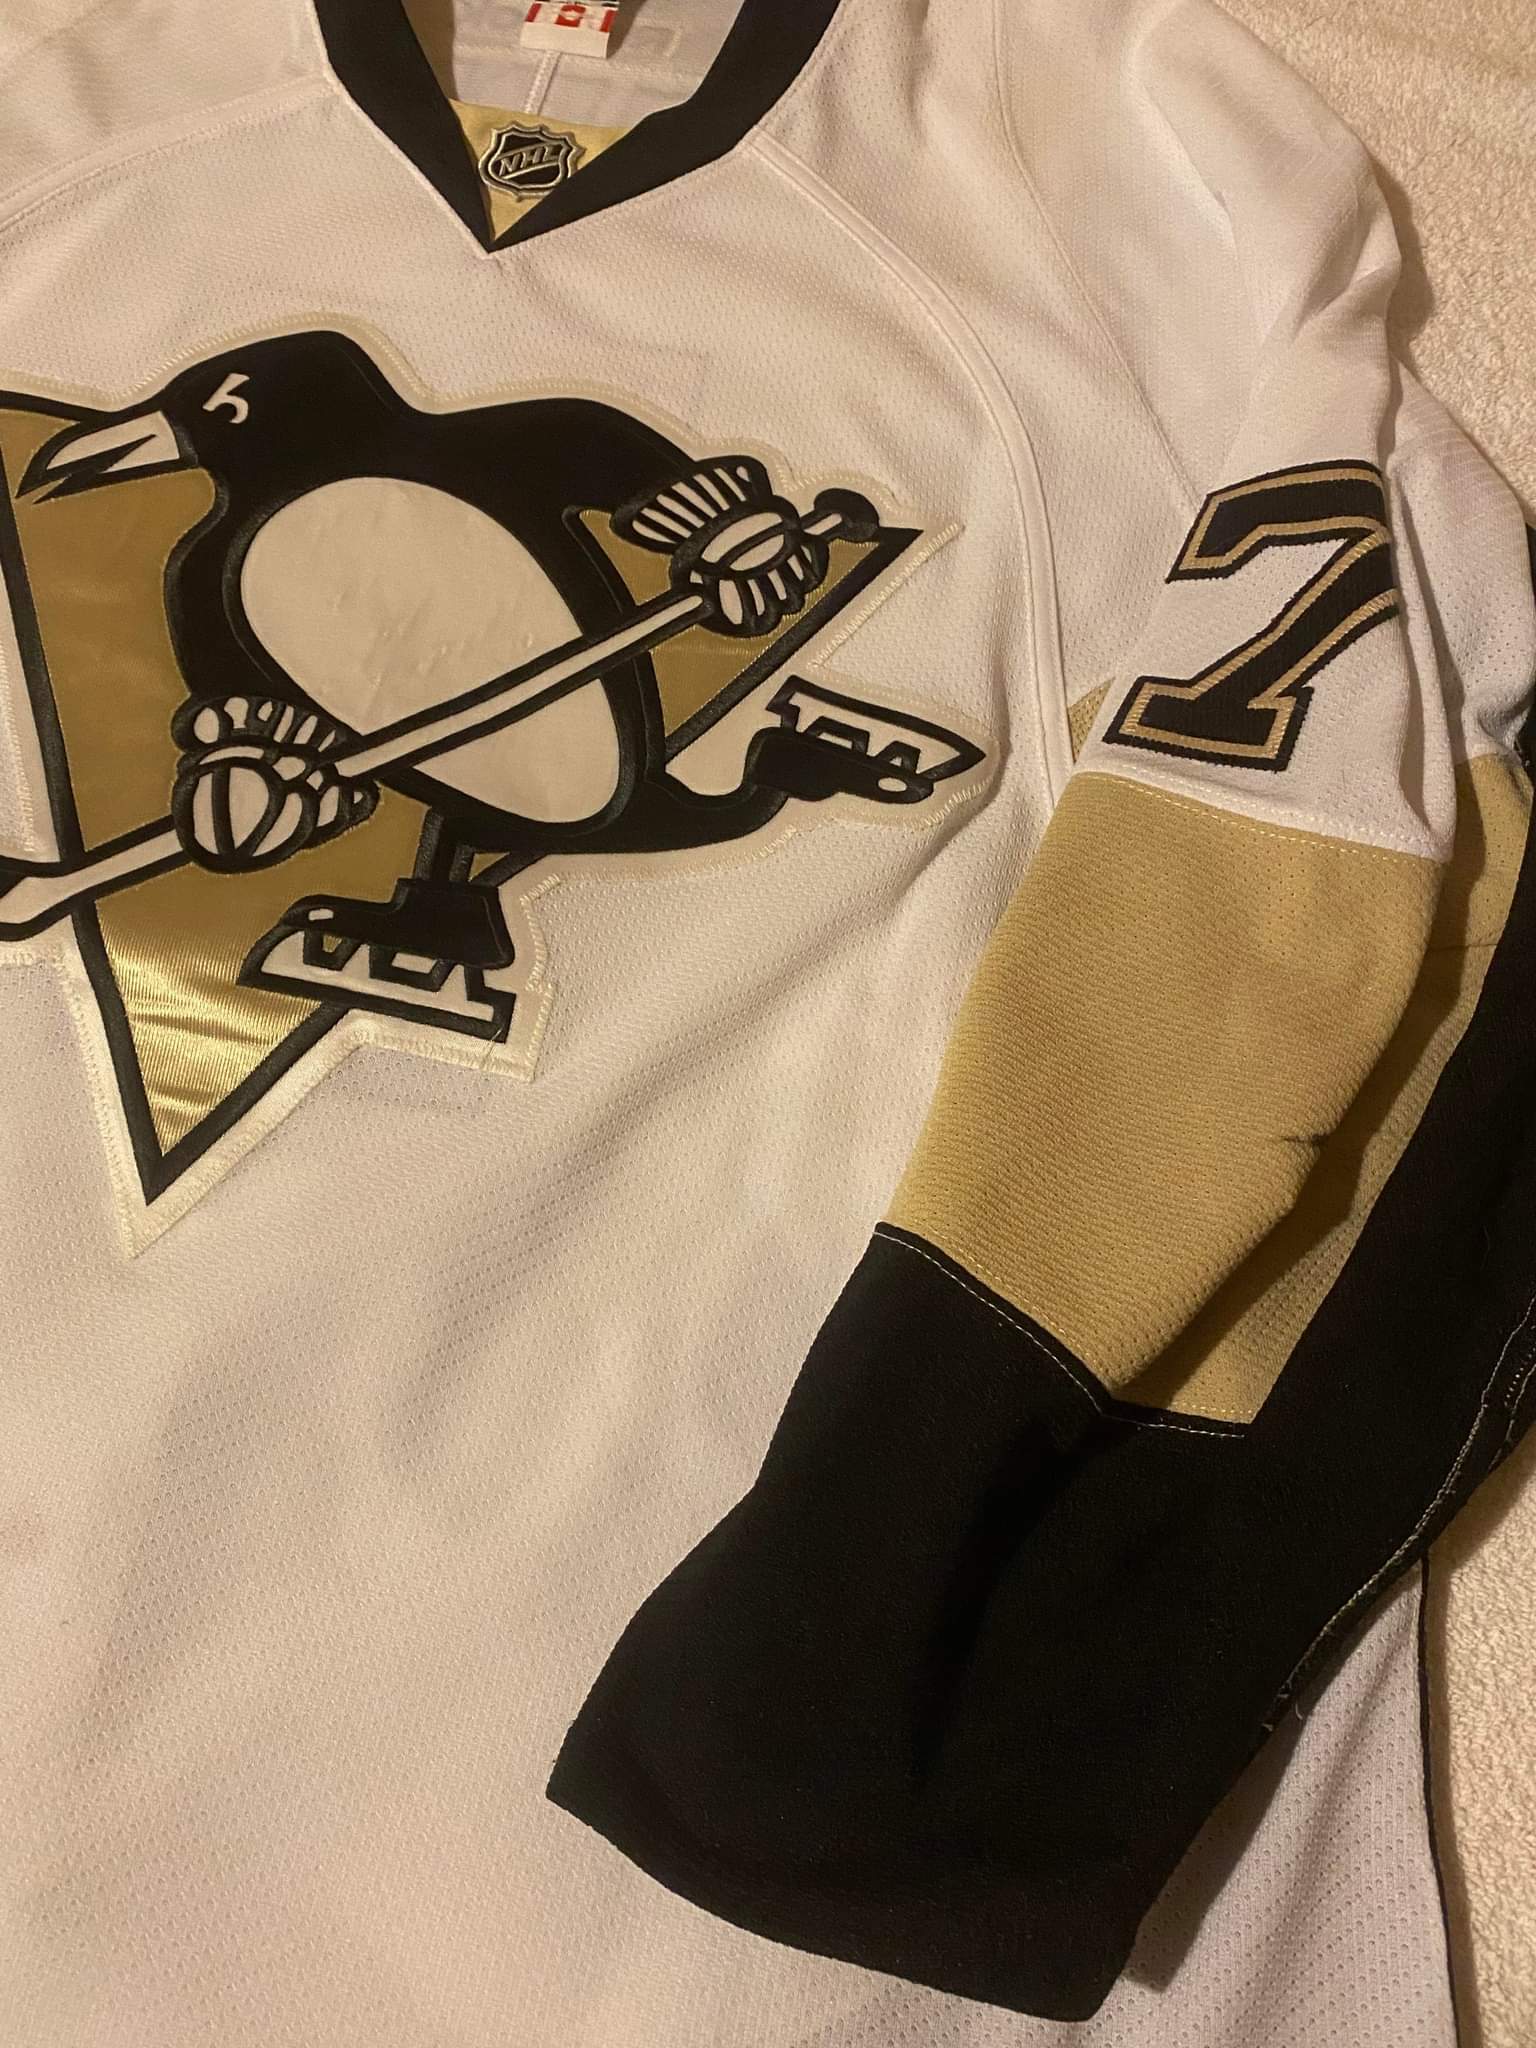 Pittsburgh Penguins Robert Bortuzzo #41 Autographed Replica Jersey, Size 48